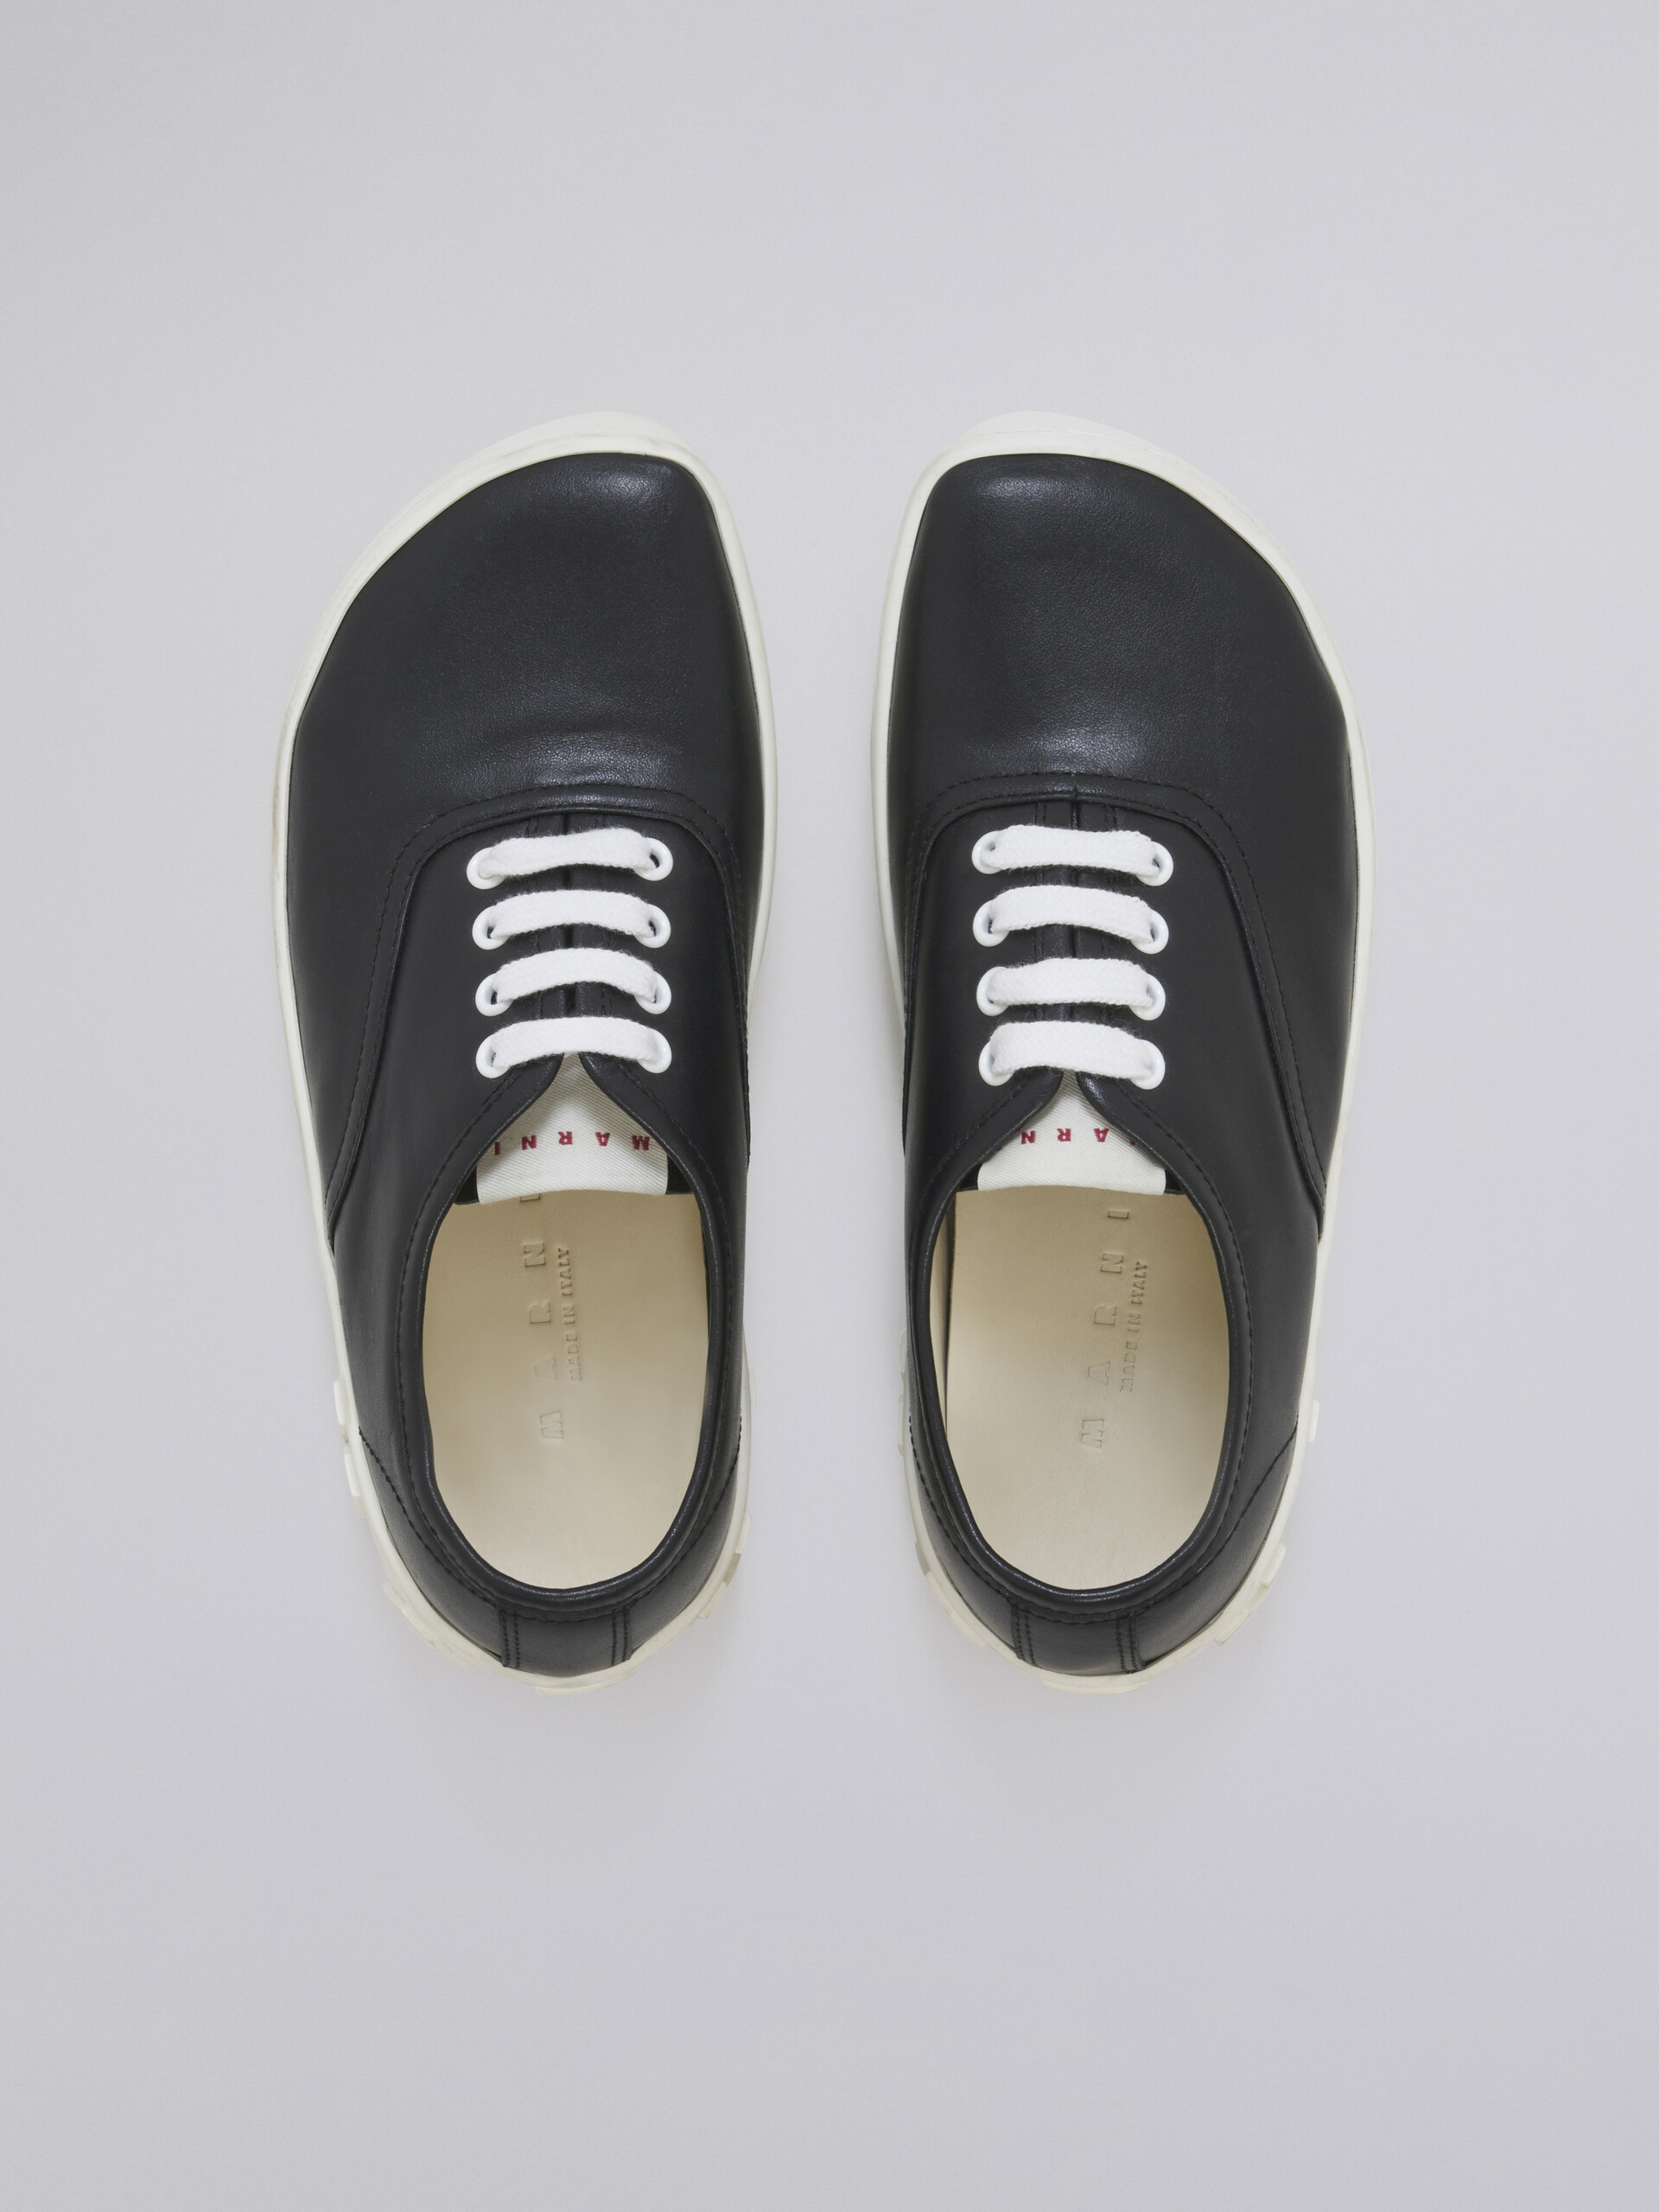 Sneakers en cuir de veau lisse noir avec grand logo en relief - Sneakers - Image 4